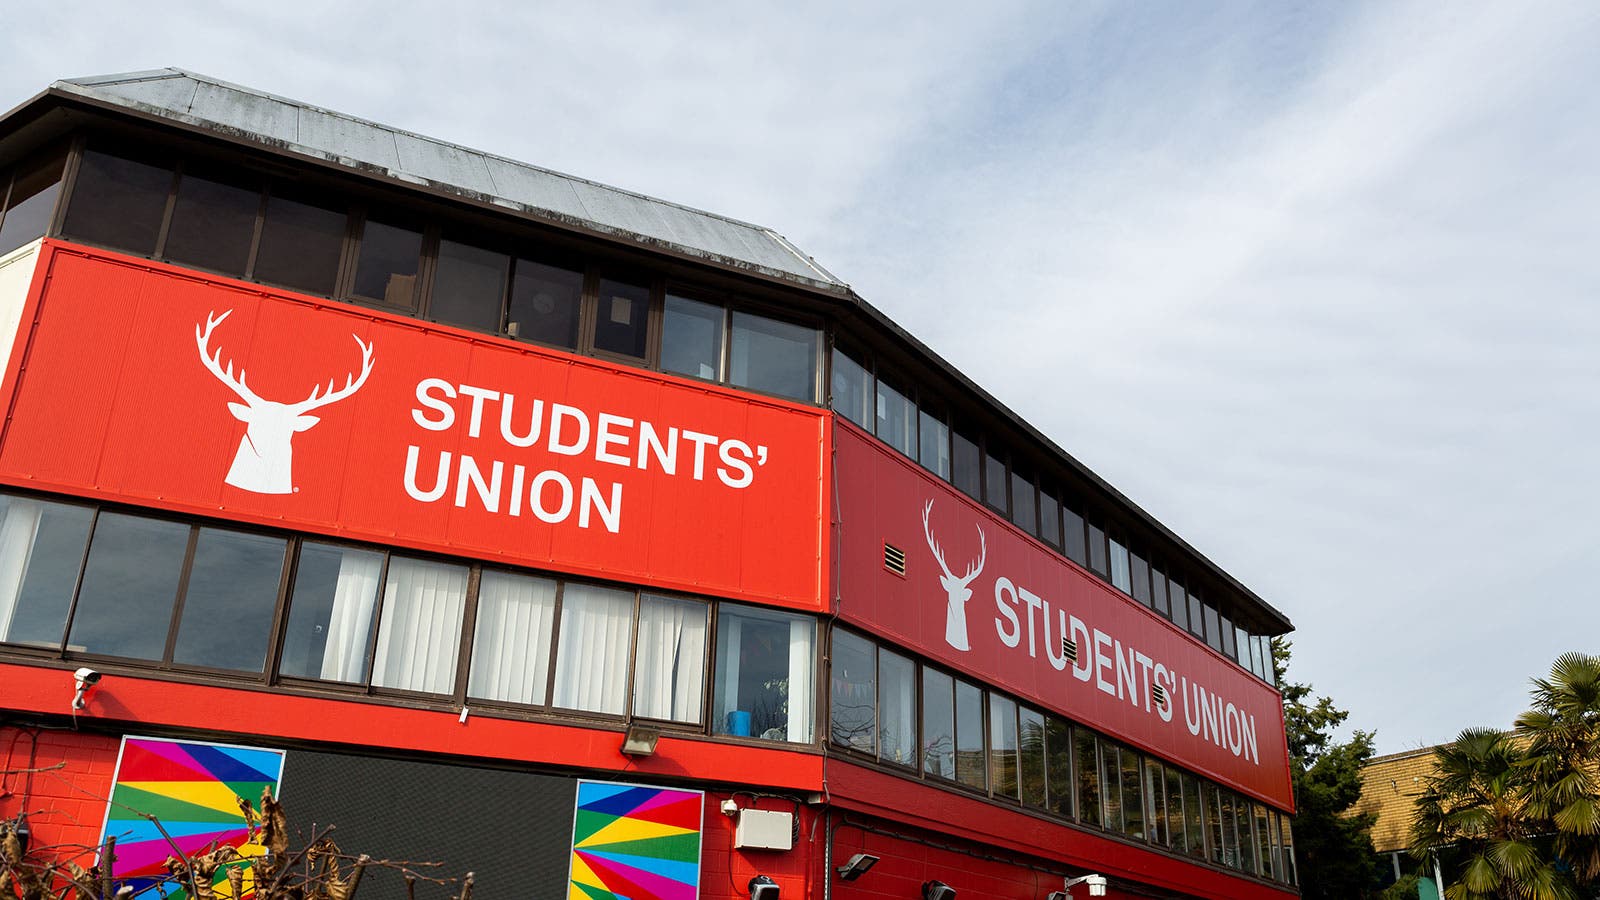 Surrey students' union